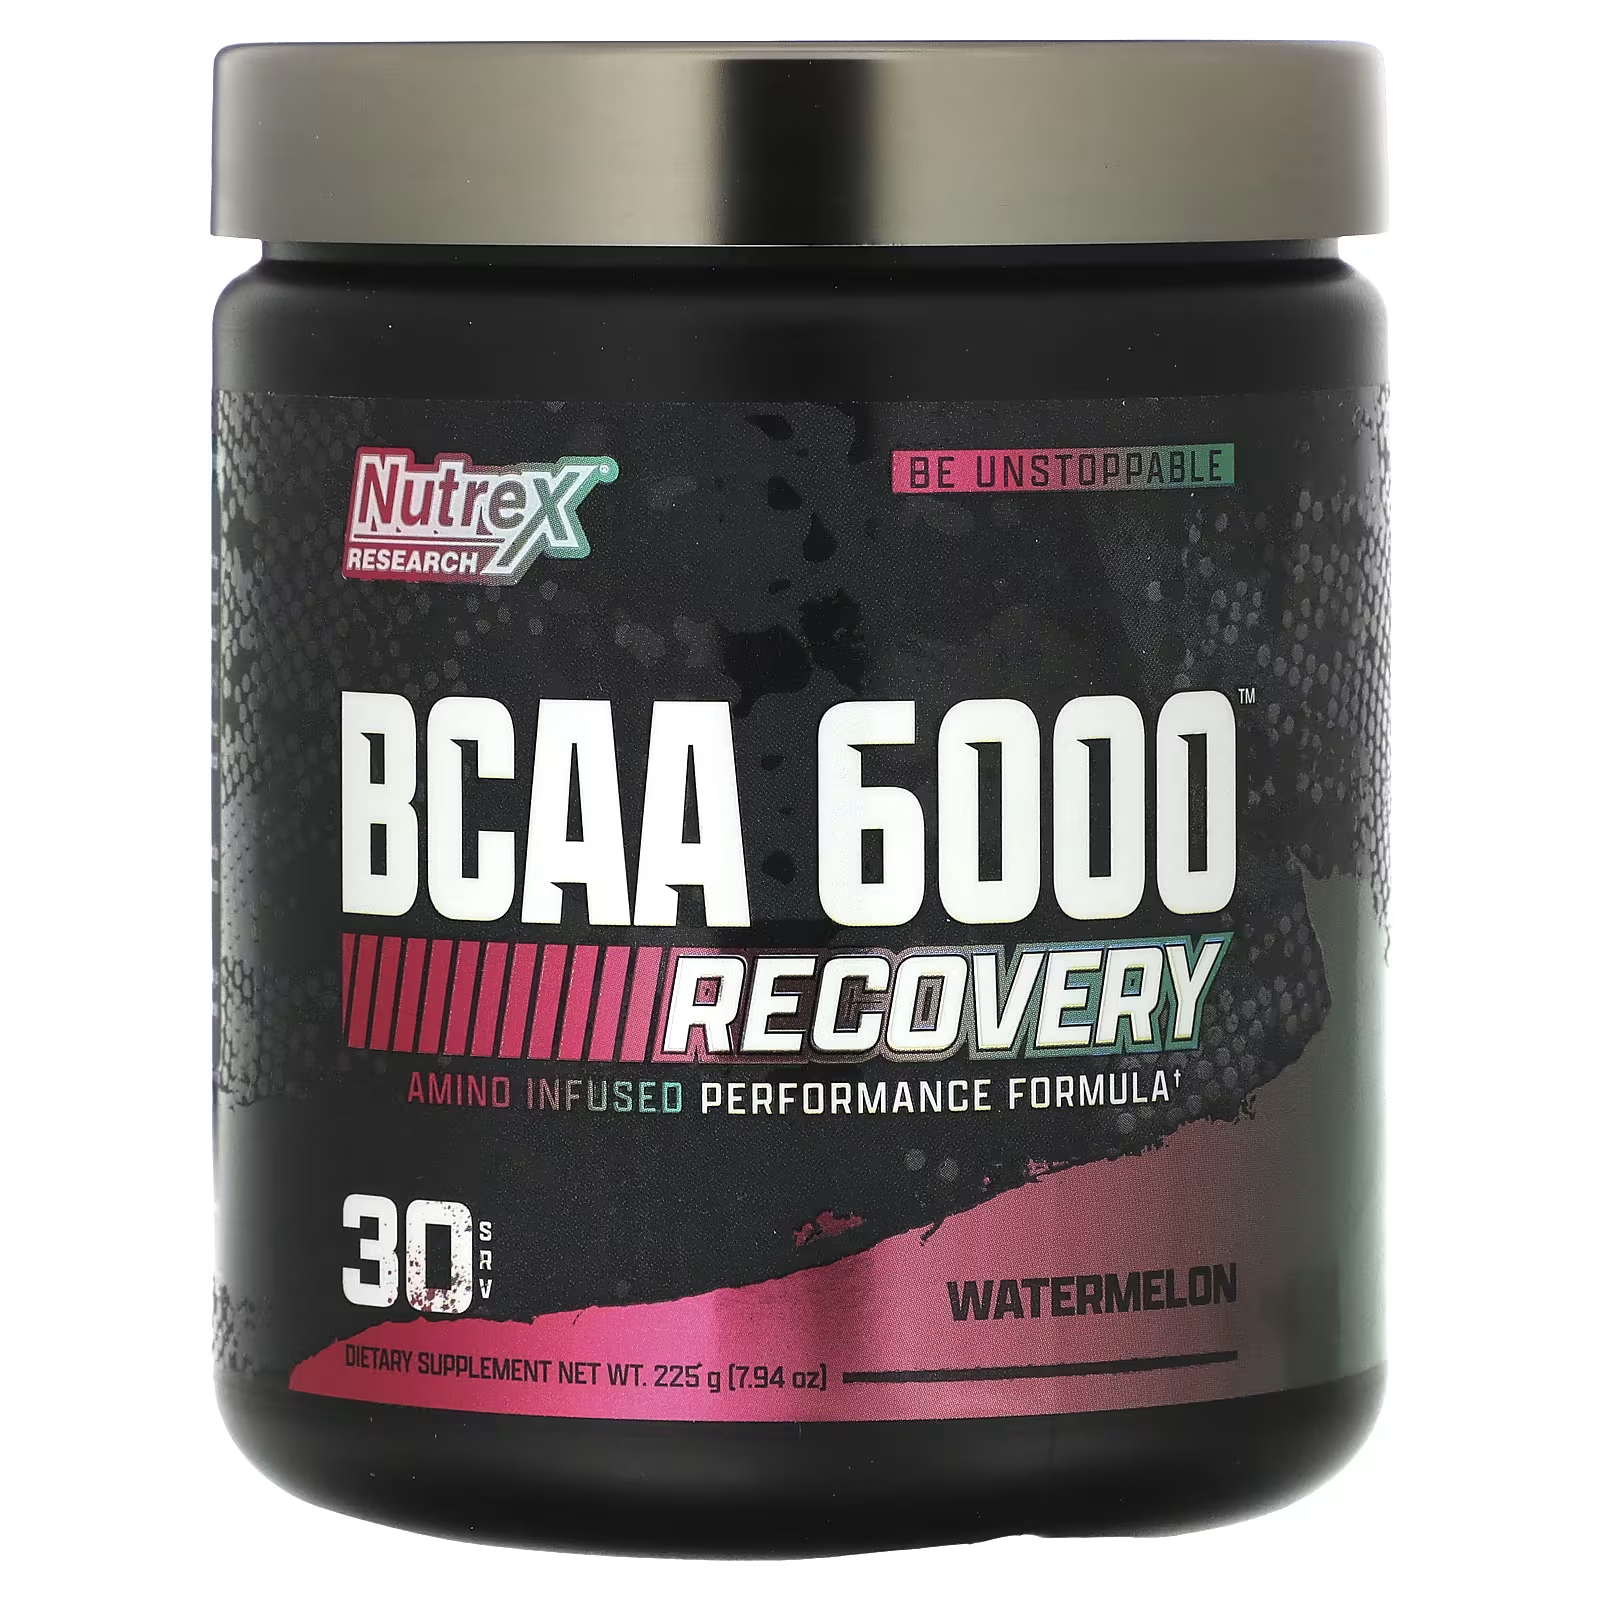 Пищевая добавка Nutrex Research BCAA 6000 Recovery арбуз, 225 г пищевая добавка snap supplements bcaa гранат и арбуз 277 г